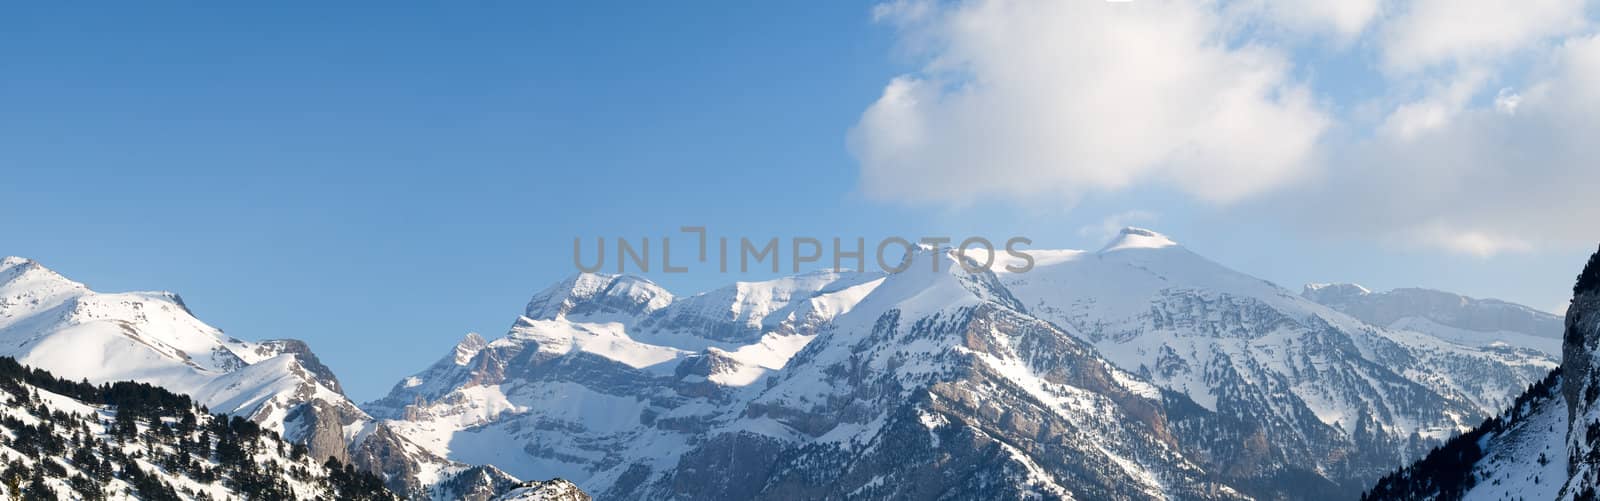 Pyrenees mountain range panorama by ldambies